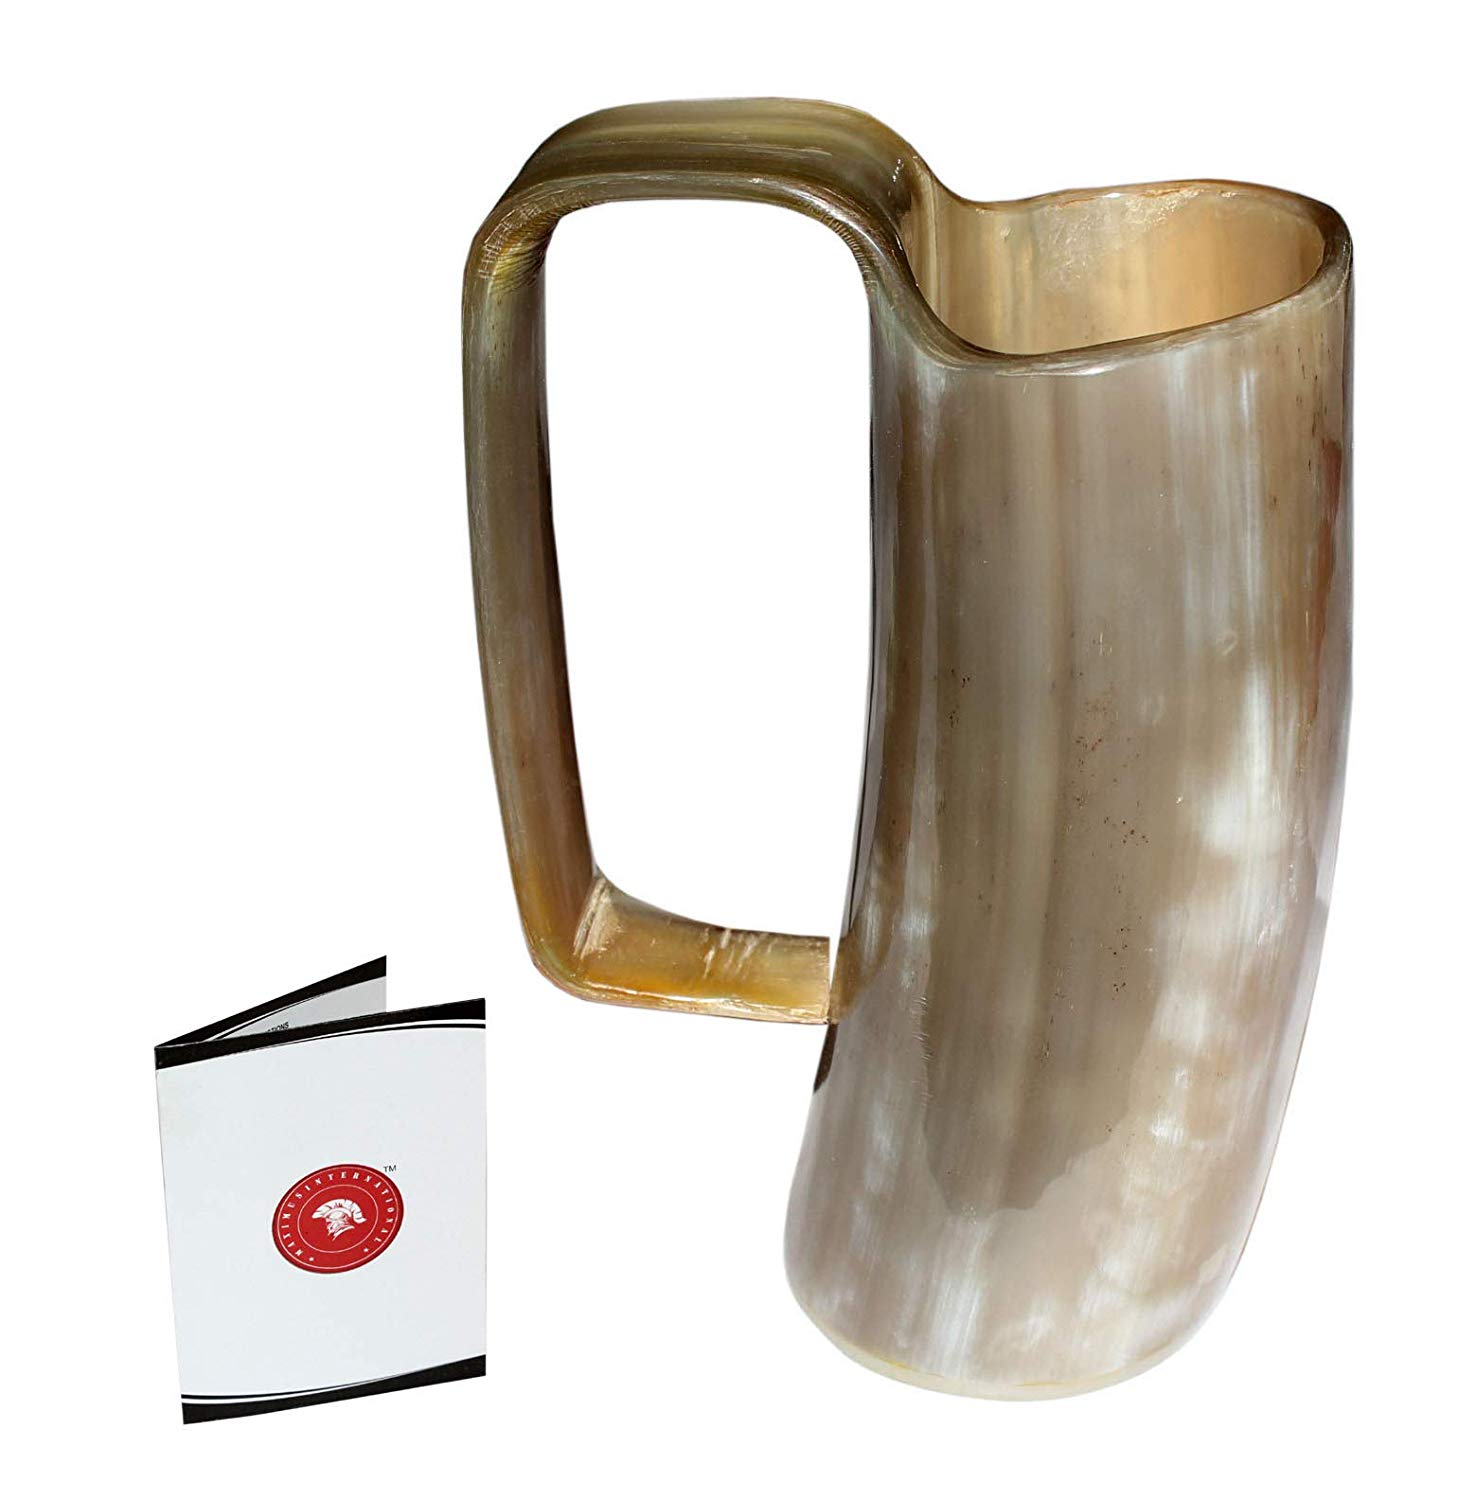 16oznt Vikings Valhallas Viking Cup Drinking Horn Tankard Authentic Medieval Inspired drinking Mug